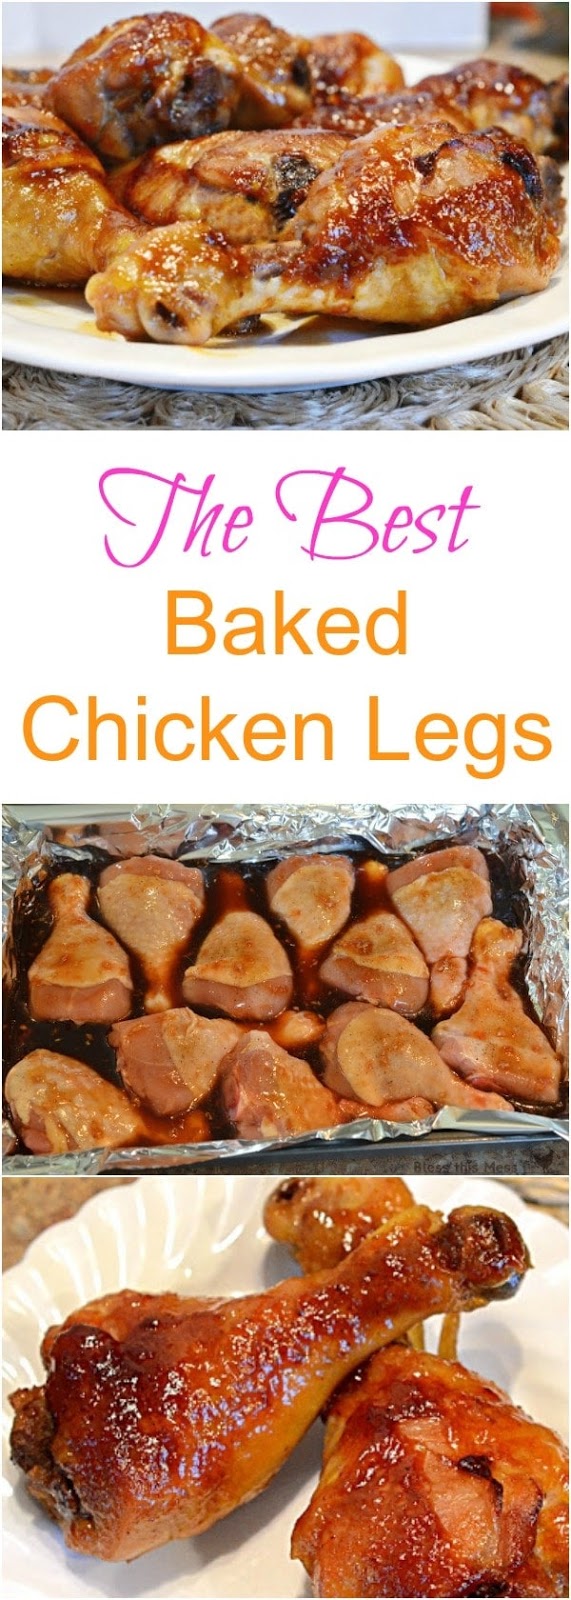 The best baked chicken legs